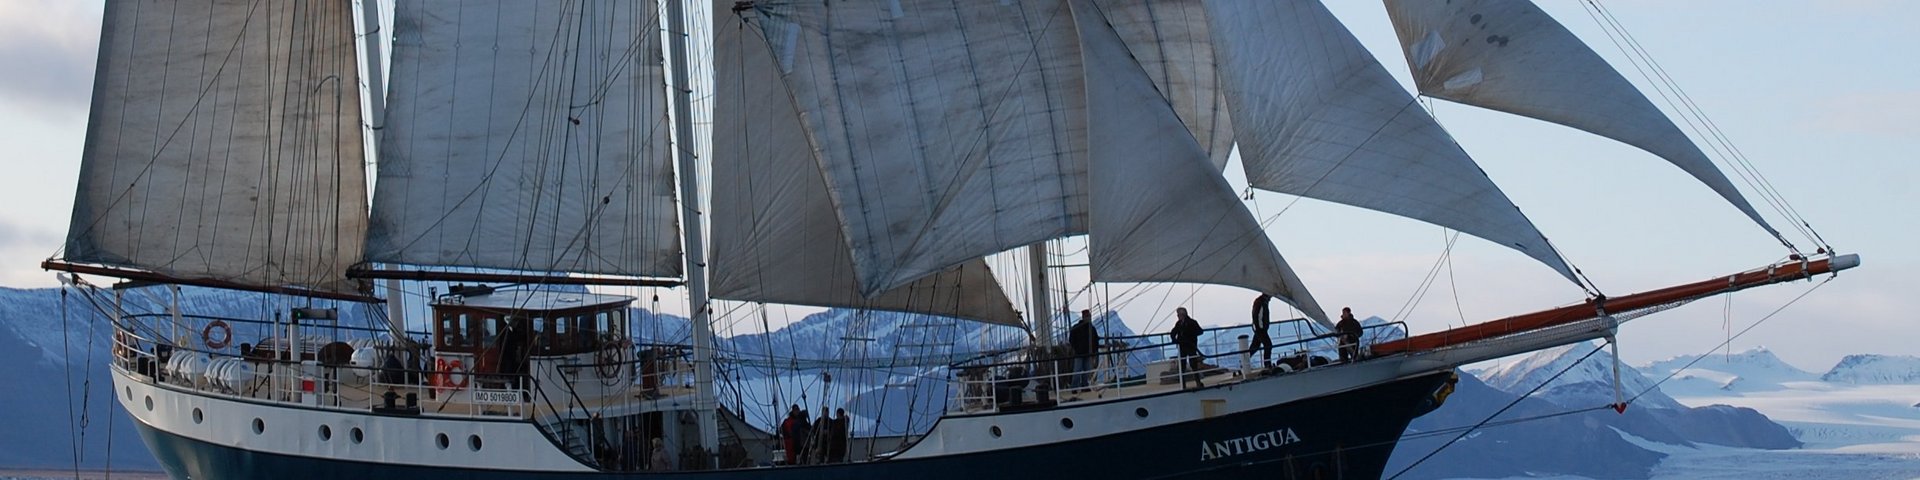 Segelschiff Antigua unter Segel